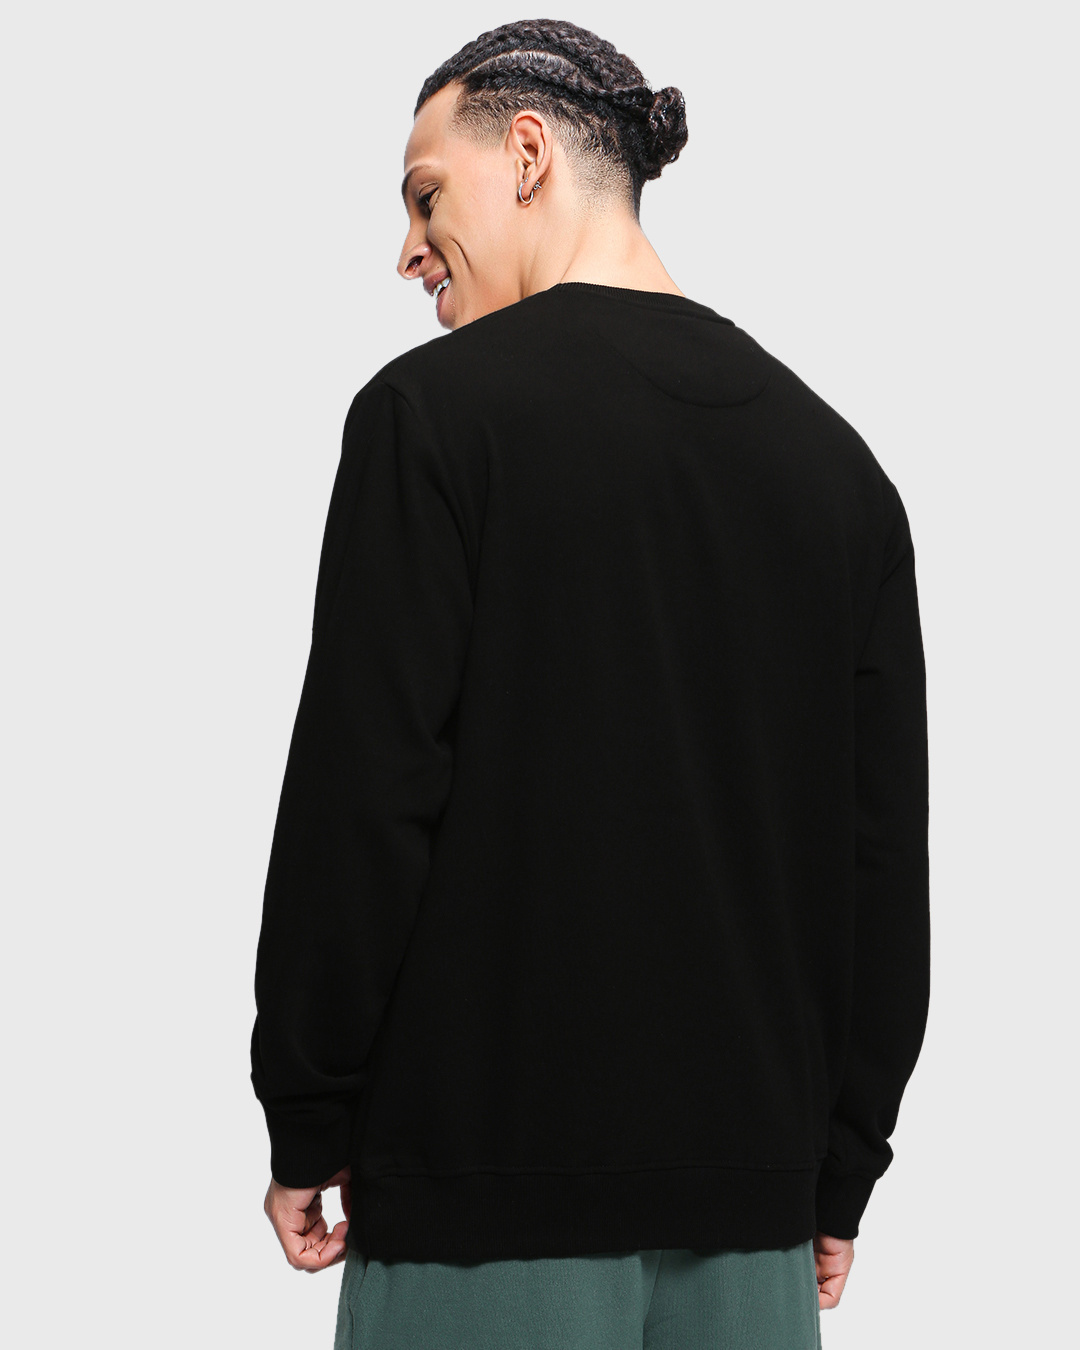 Buy Men's Black Vibes Graphic Printed Sweatshirt Online at Bewakoof